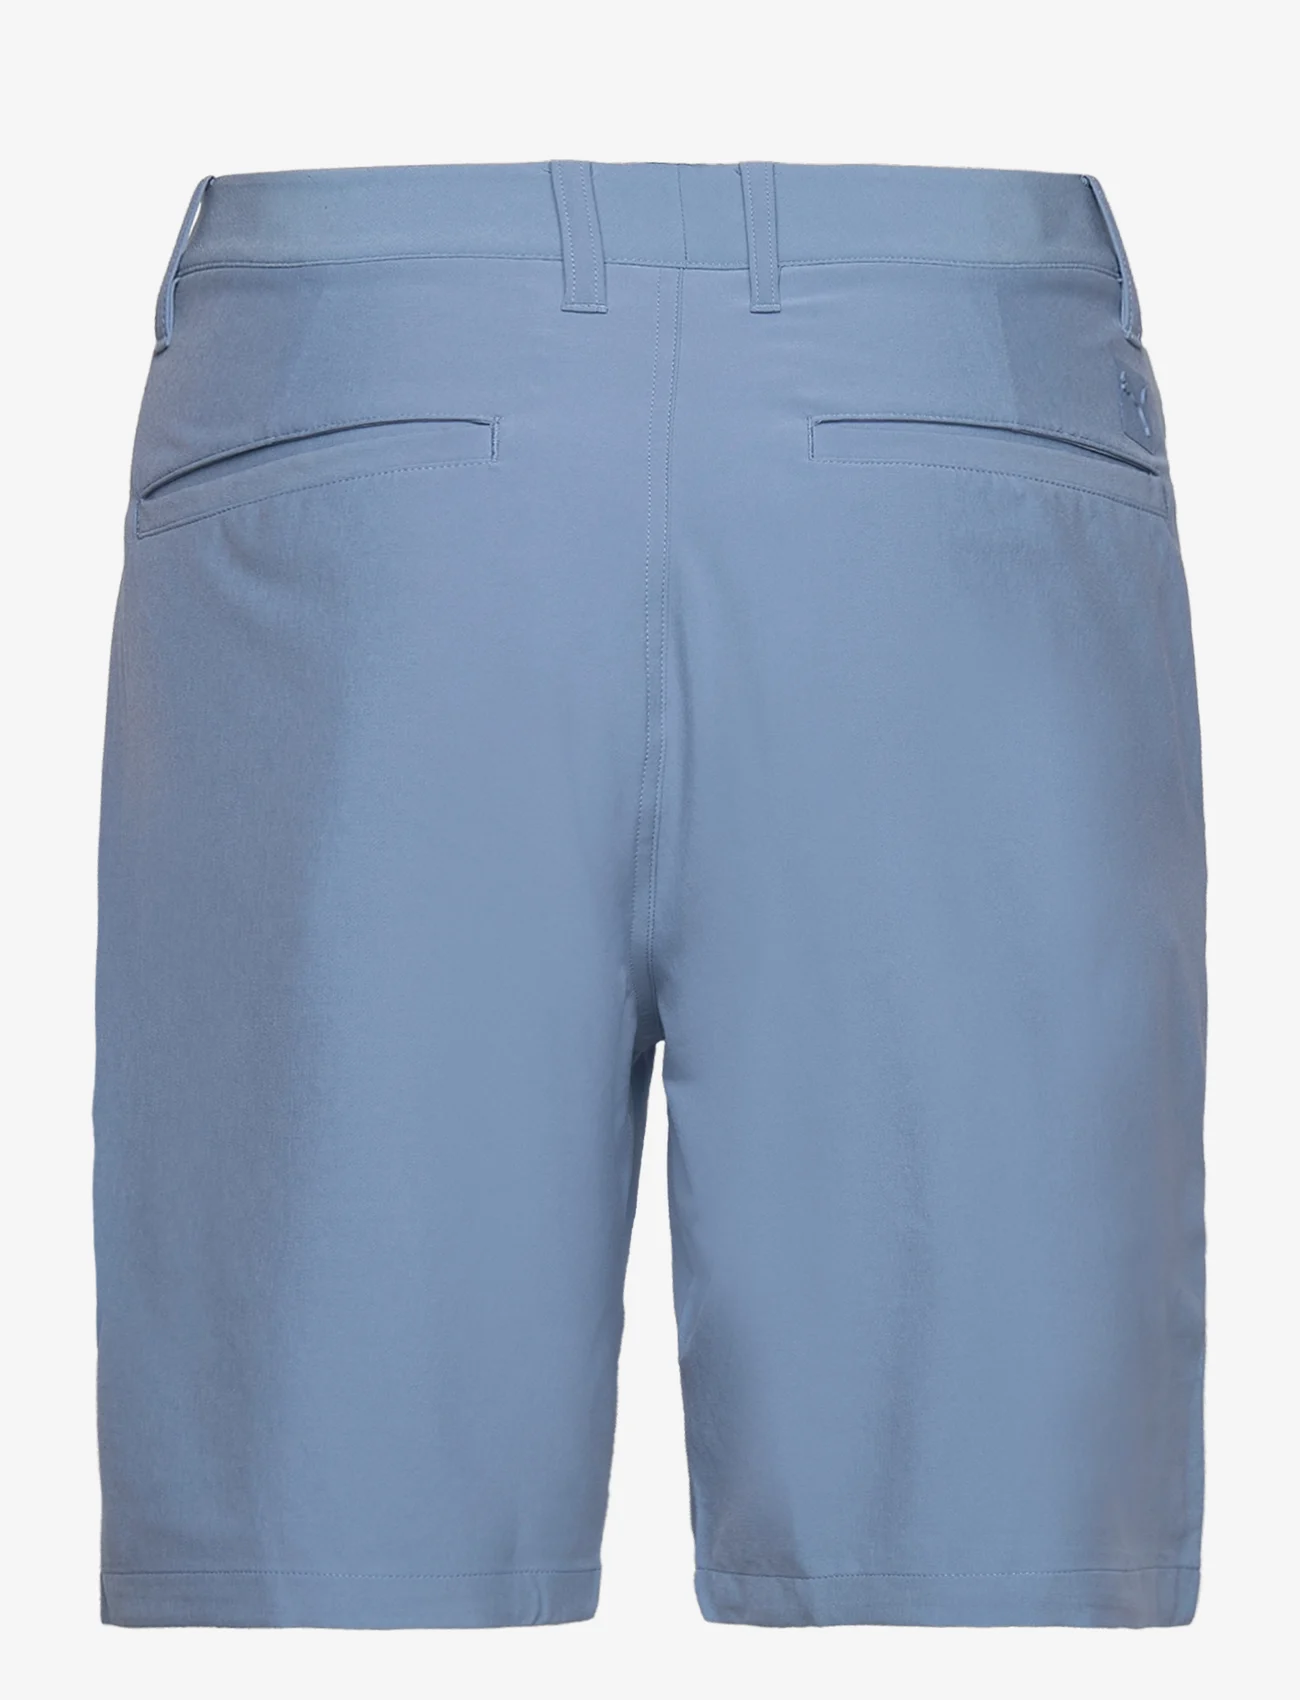 PUMA Golf - 101 Solid Short 9" - sports shorts - zen blue - 1